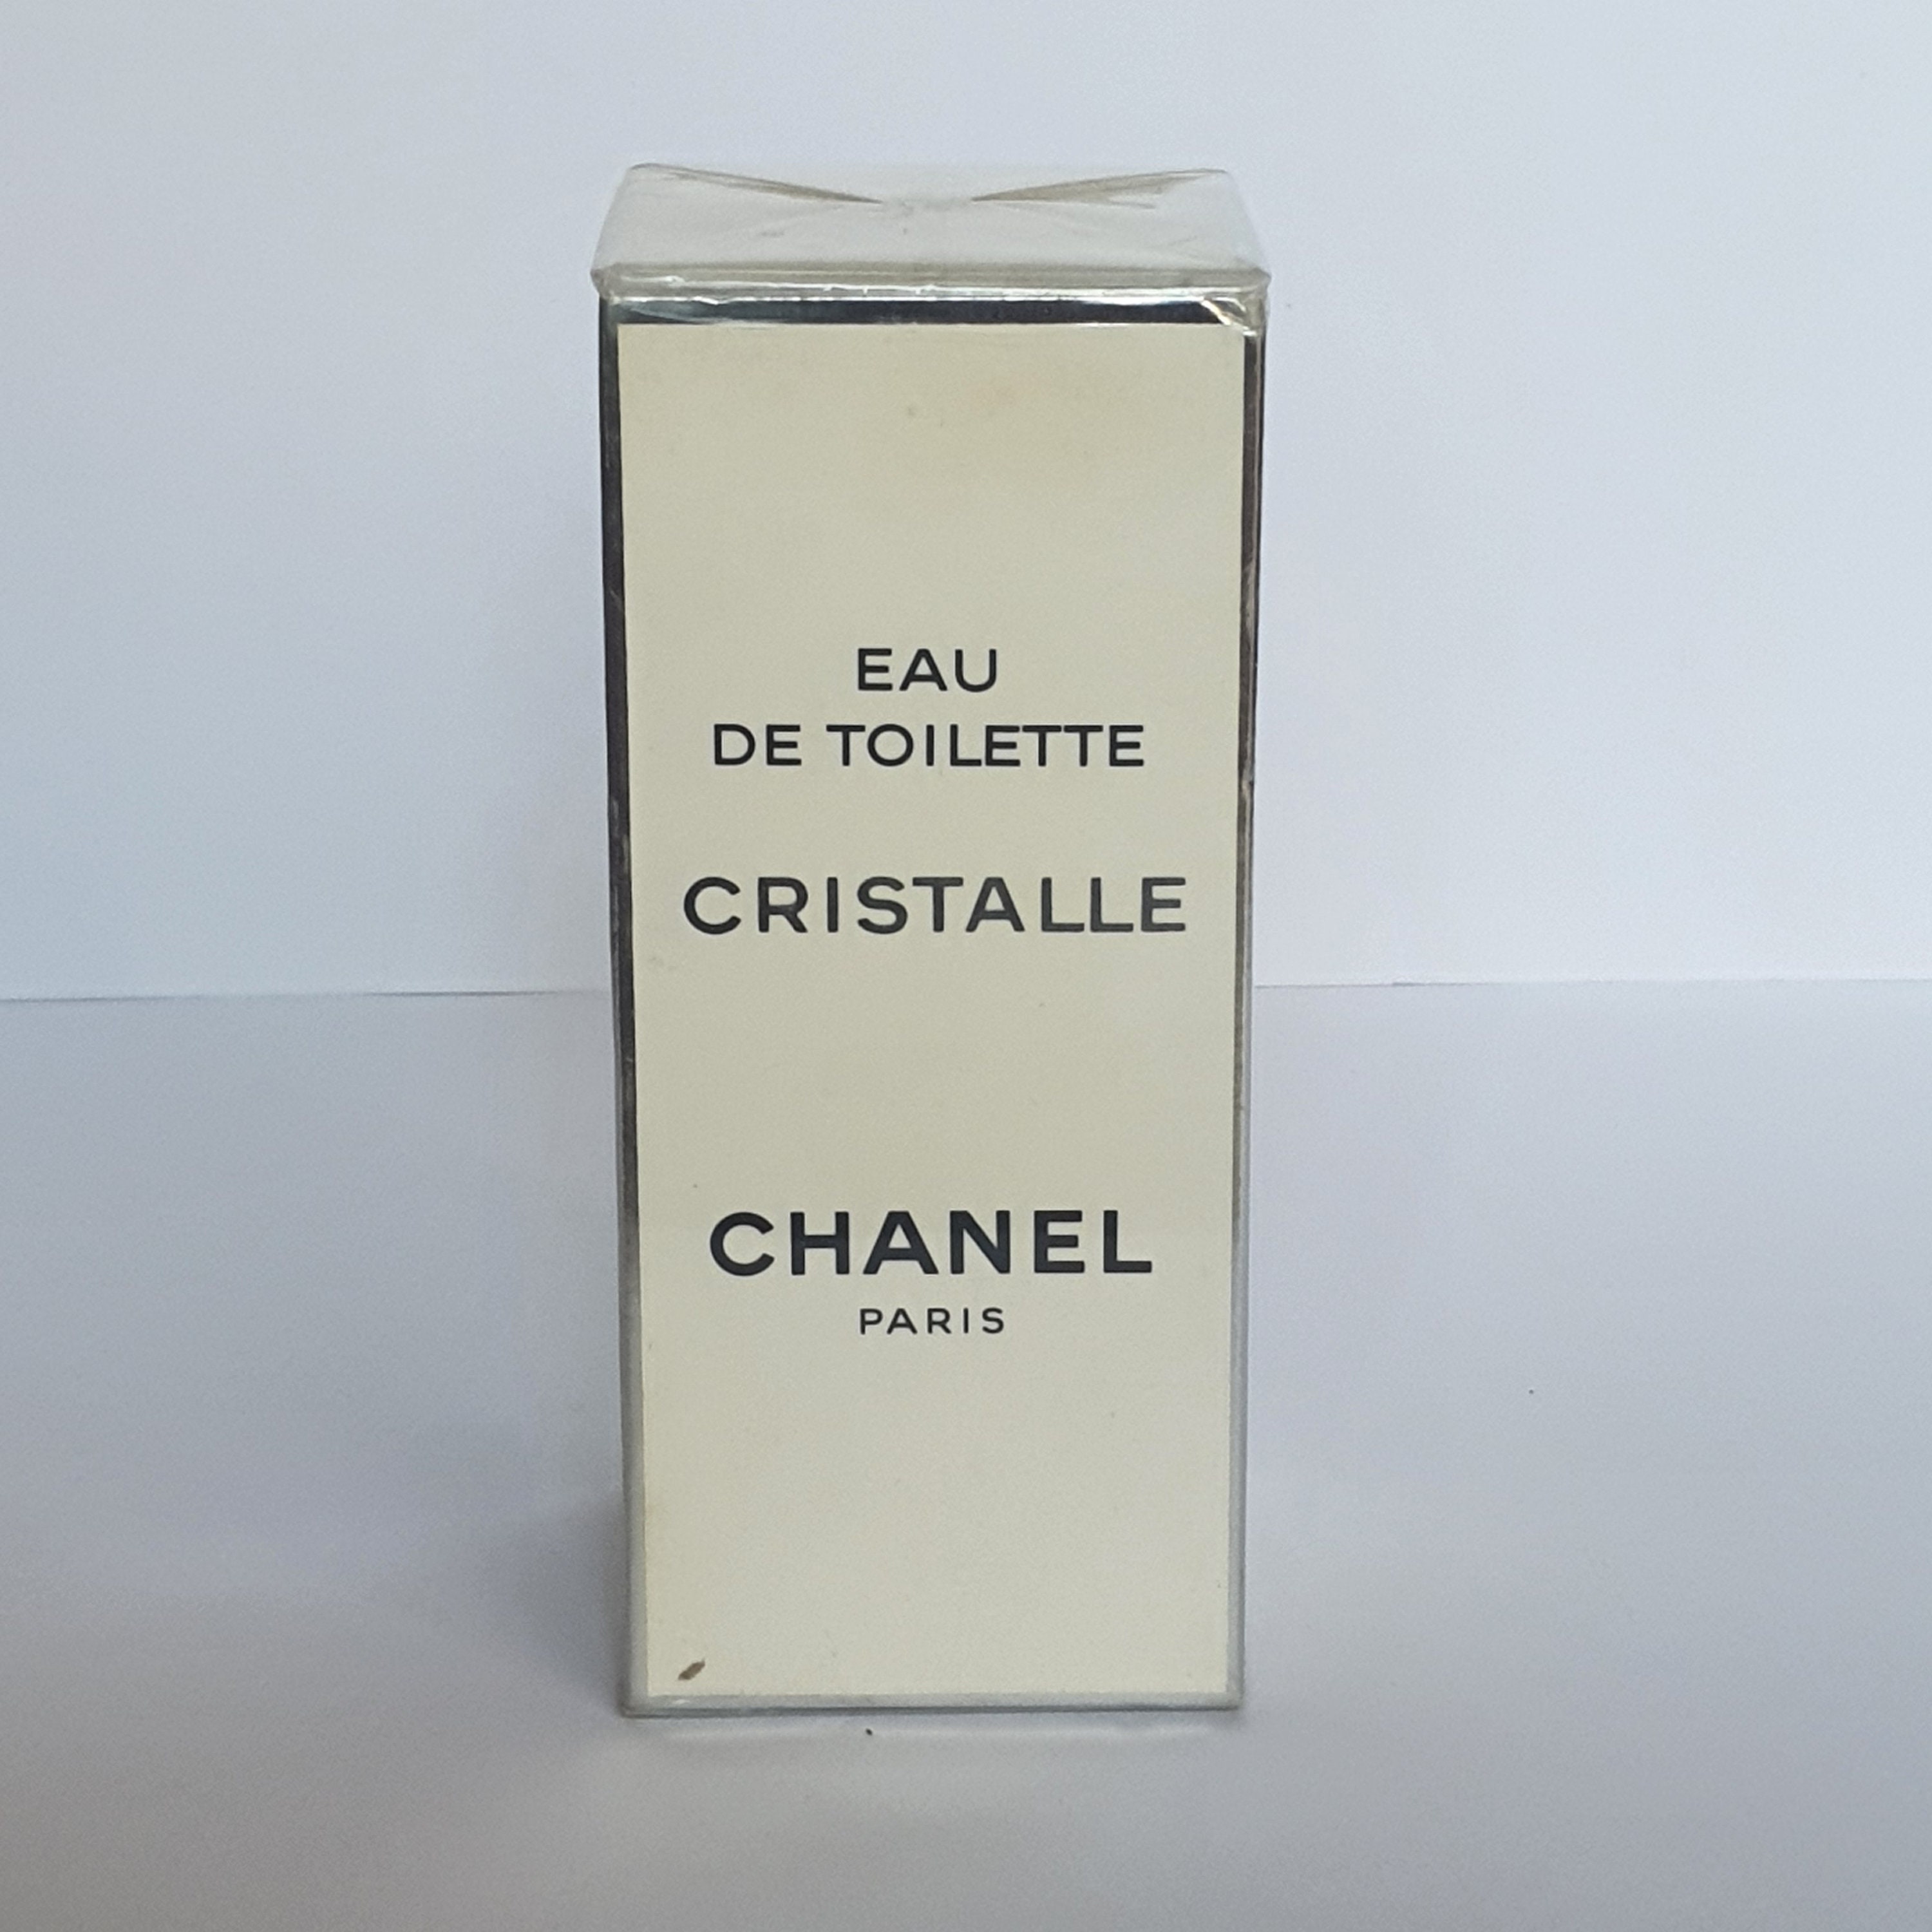 chanel cristalle perfume for women